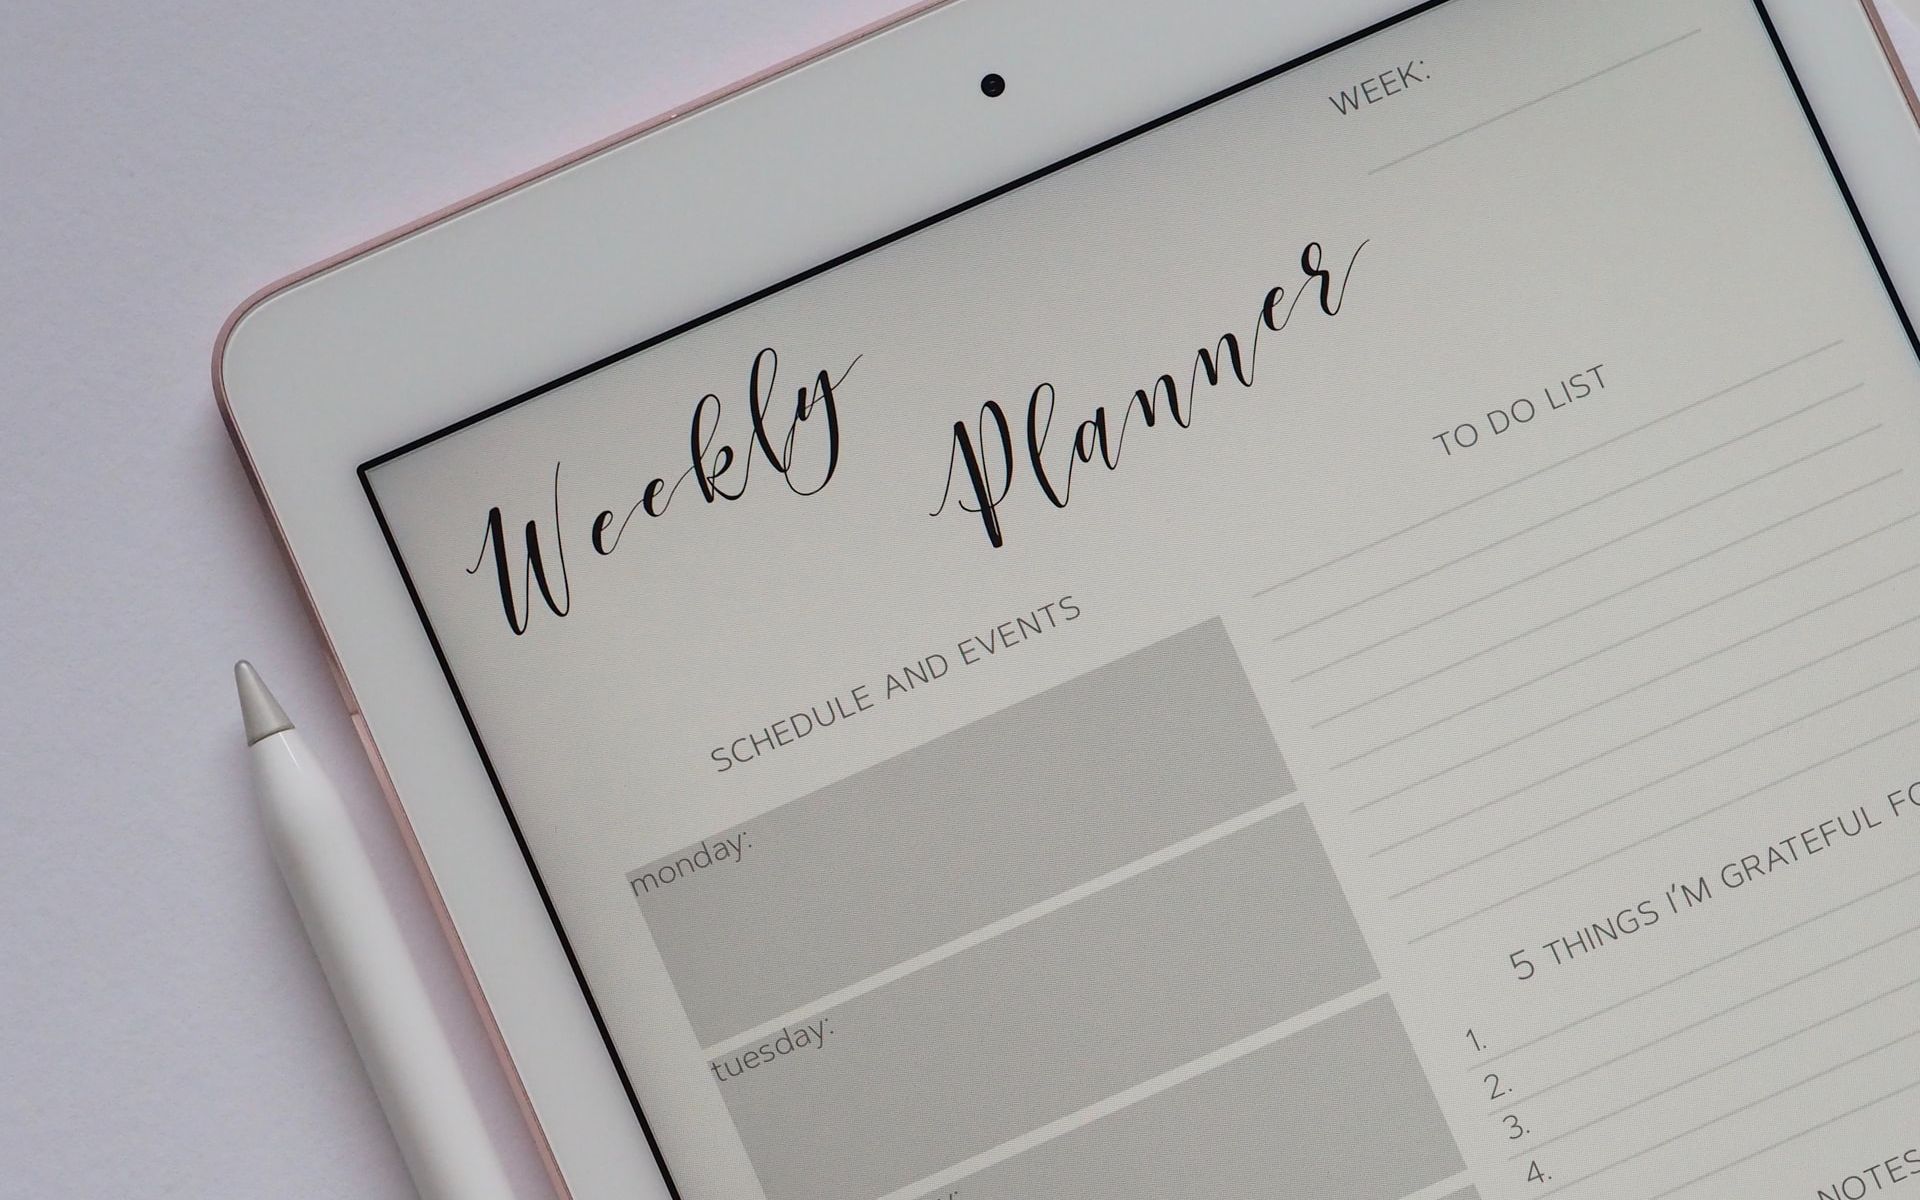 Weekly Work Schedule Planner Open on an iPad